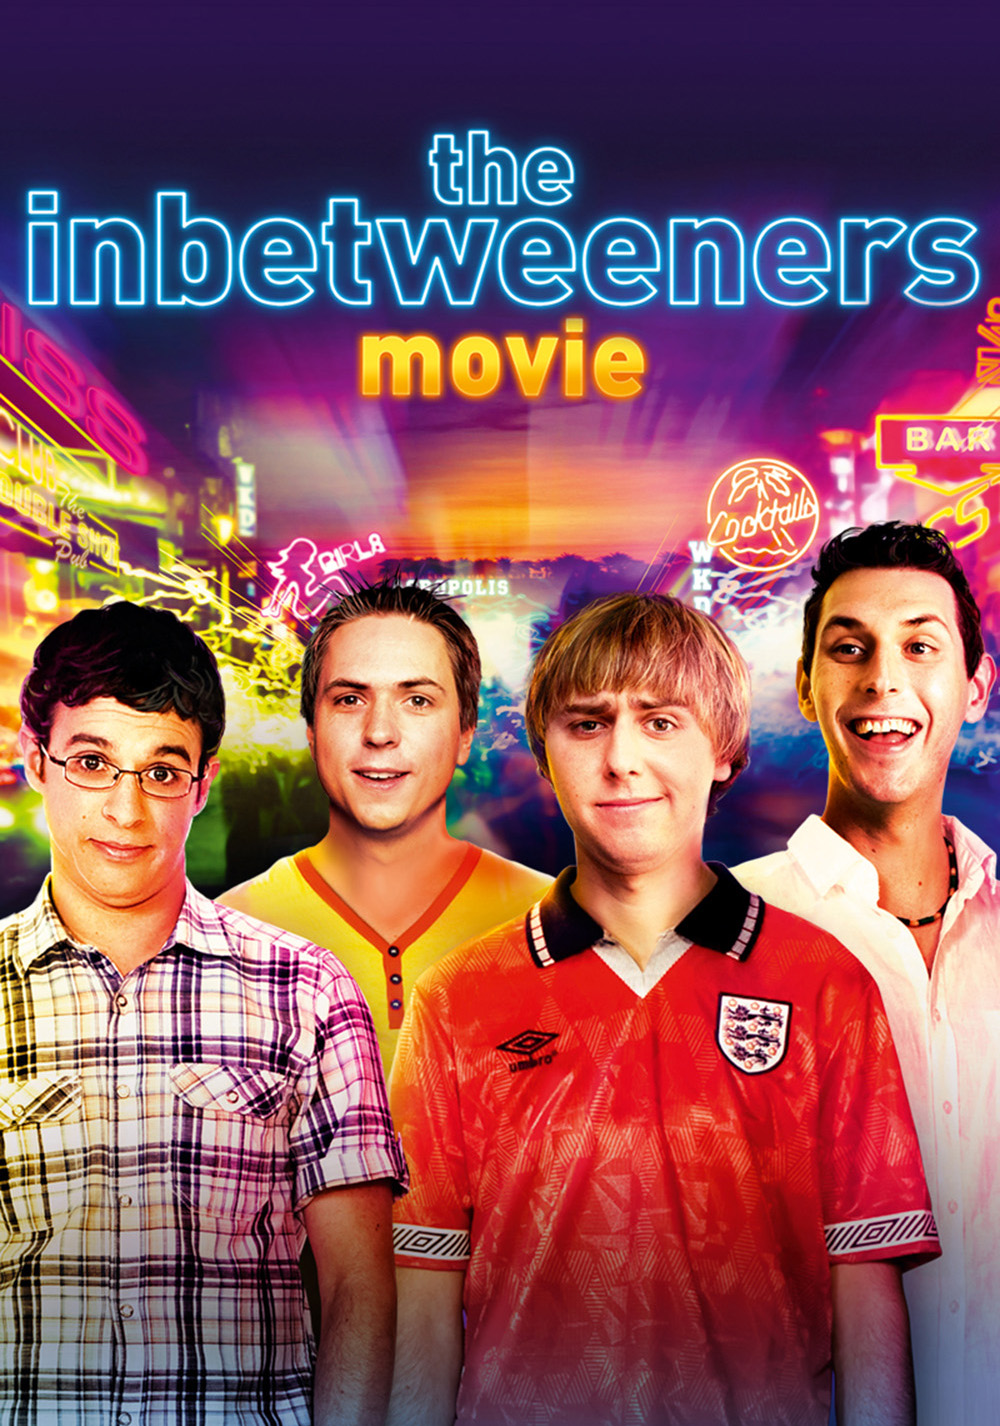 The Inbetweeners Movie Picture